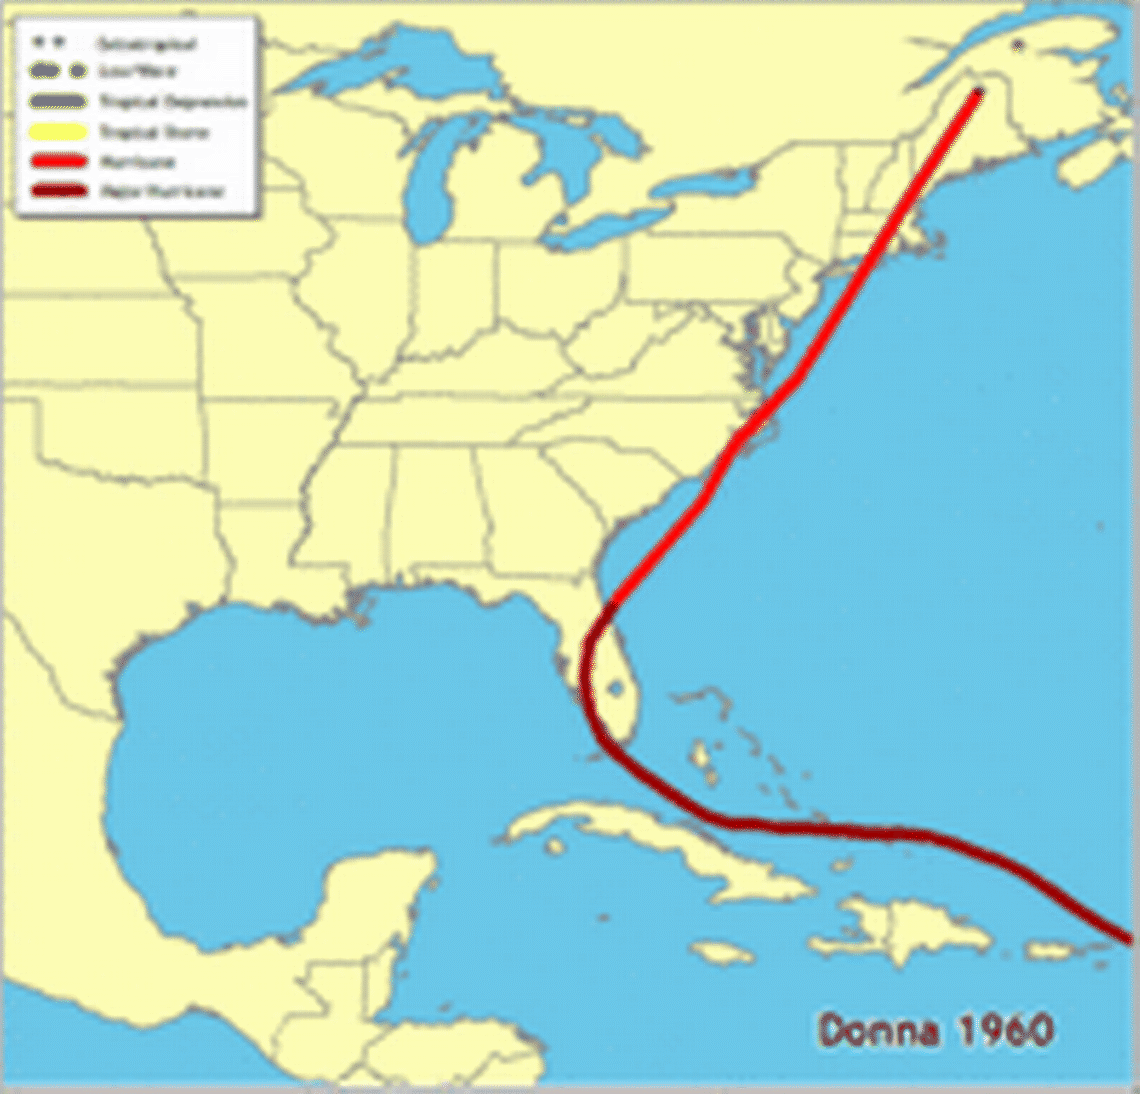 Hurricane Donna 1960.